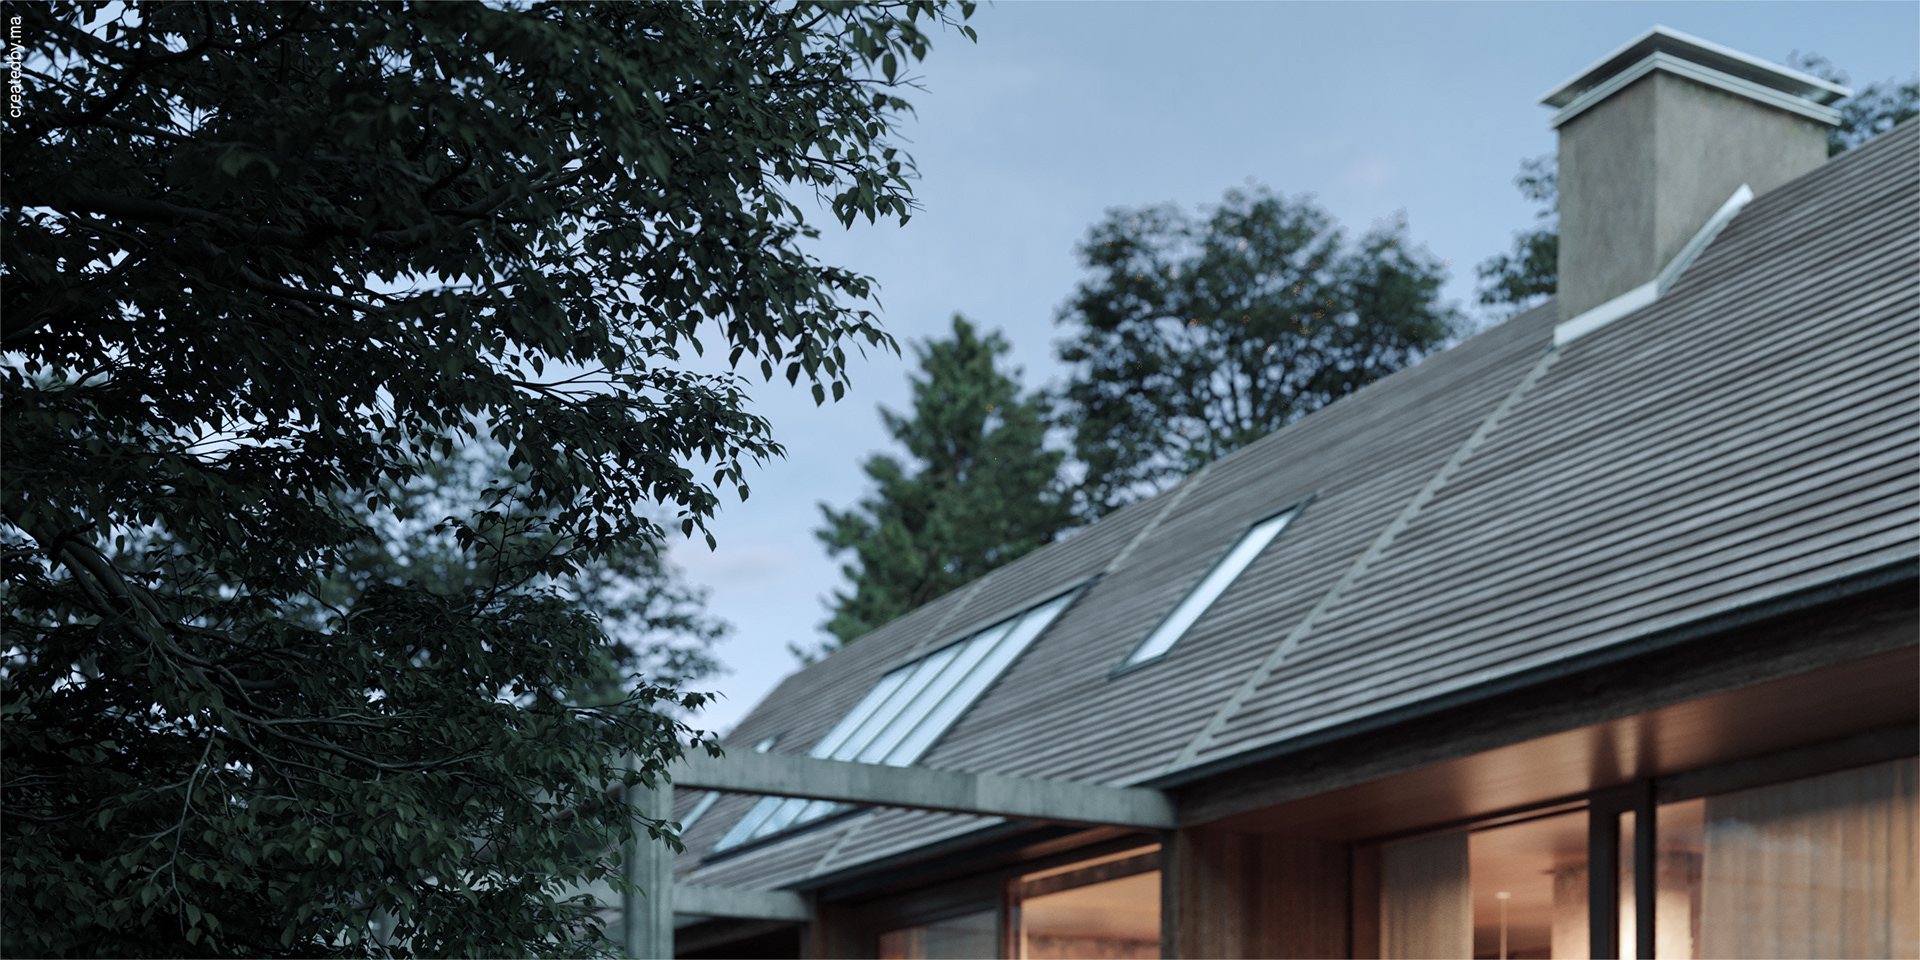 Summerhouse Sandby |Johan Sundberg Arkitektur | CGI